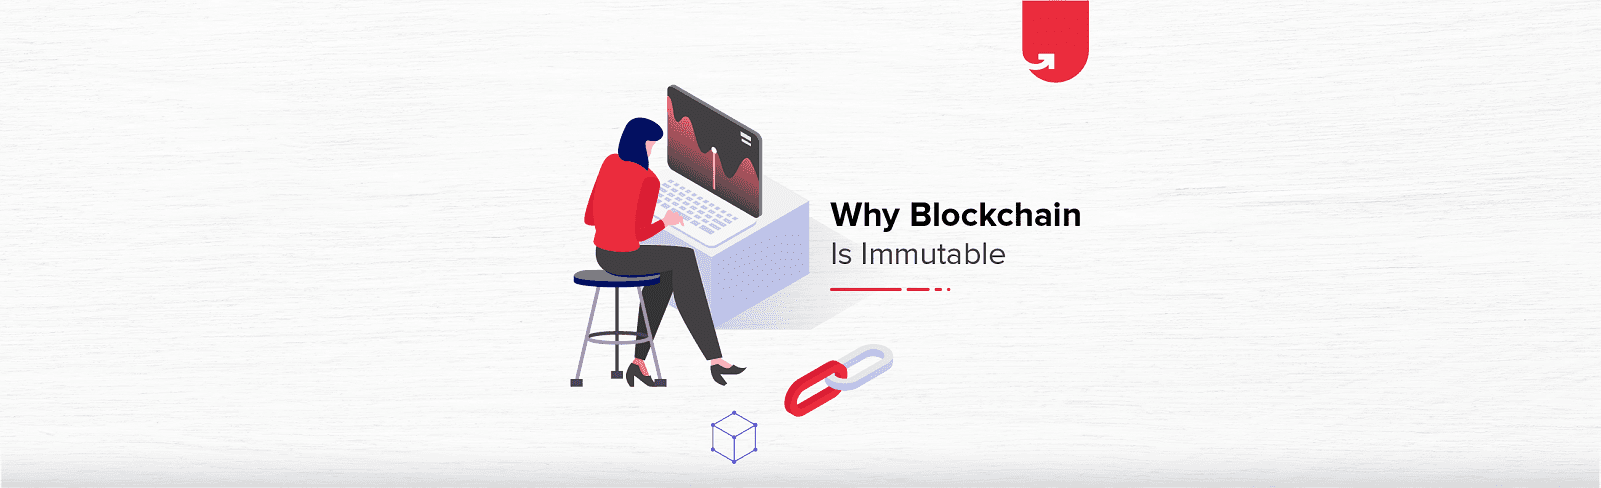 What Makes a Blockchain Network Immutable? Immutability Explained